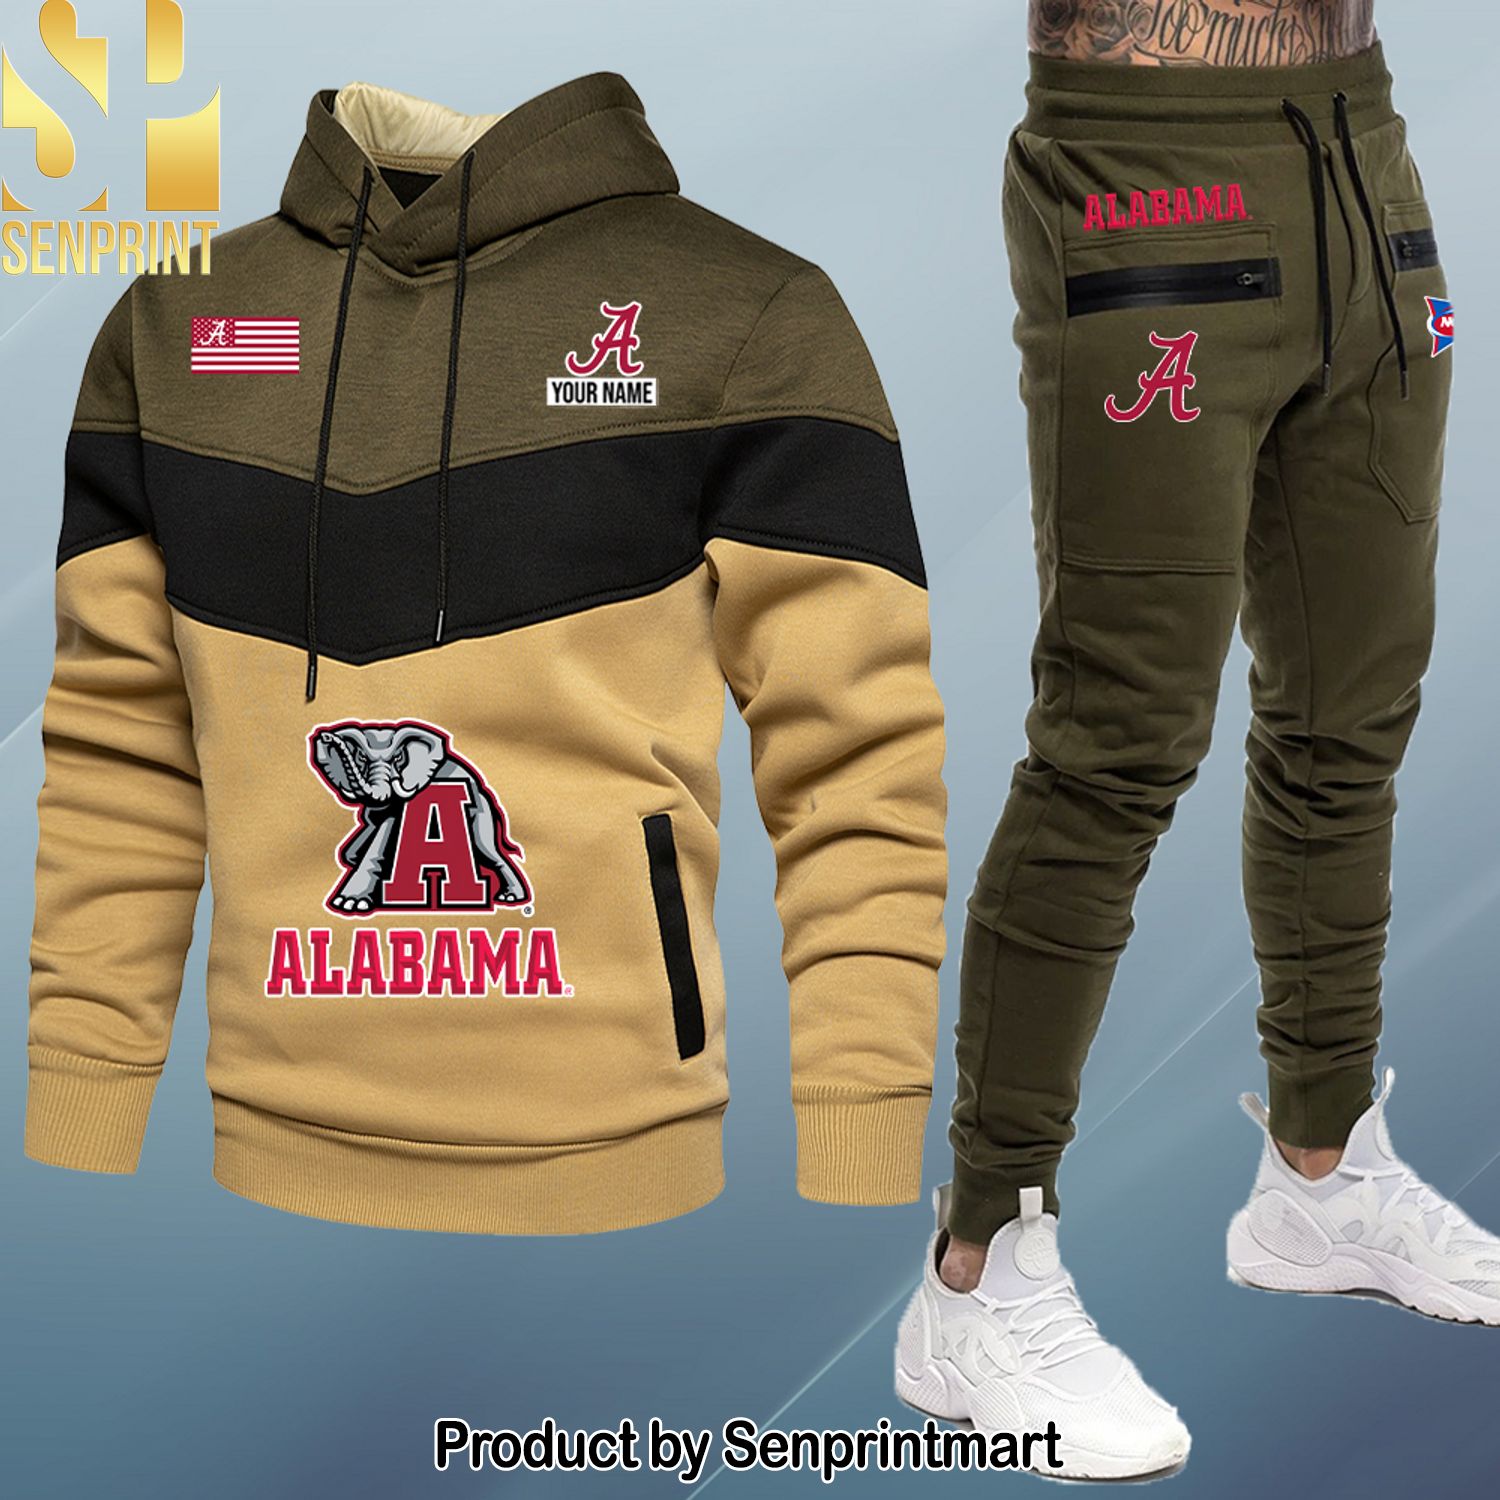 Alabama Crimson Tide Football Hot Outfit Shirt and Pants